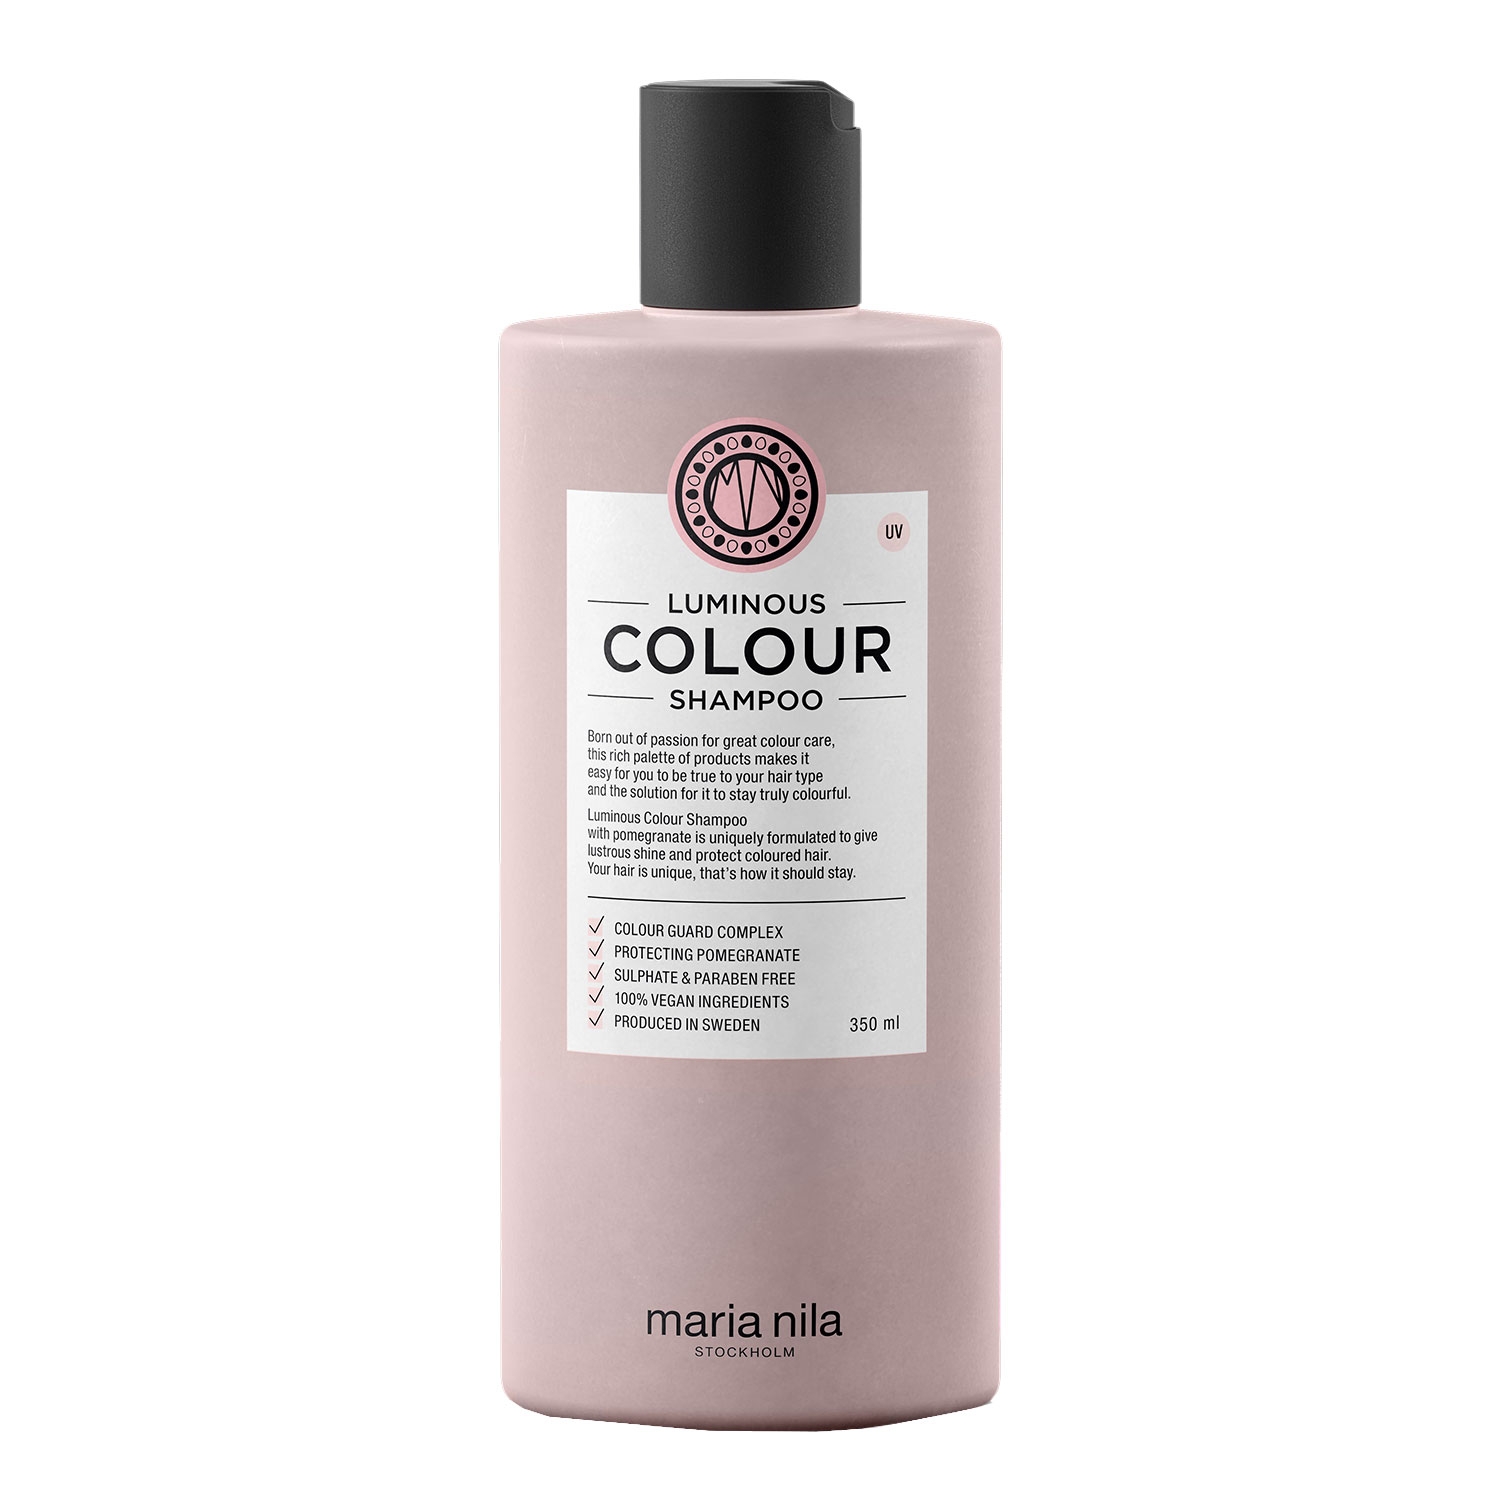 Produktbild von Care & Style - Luminous Colour Shampoo